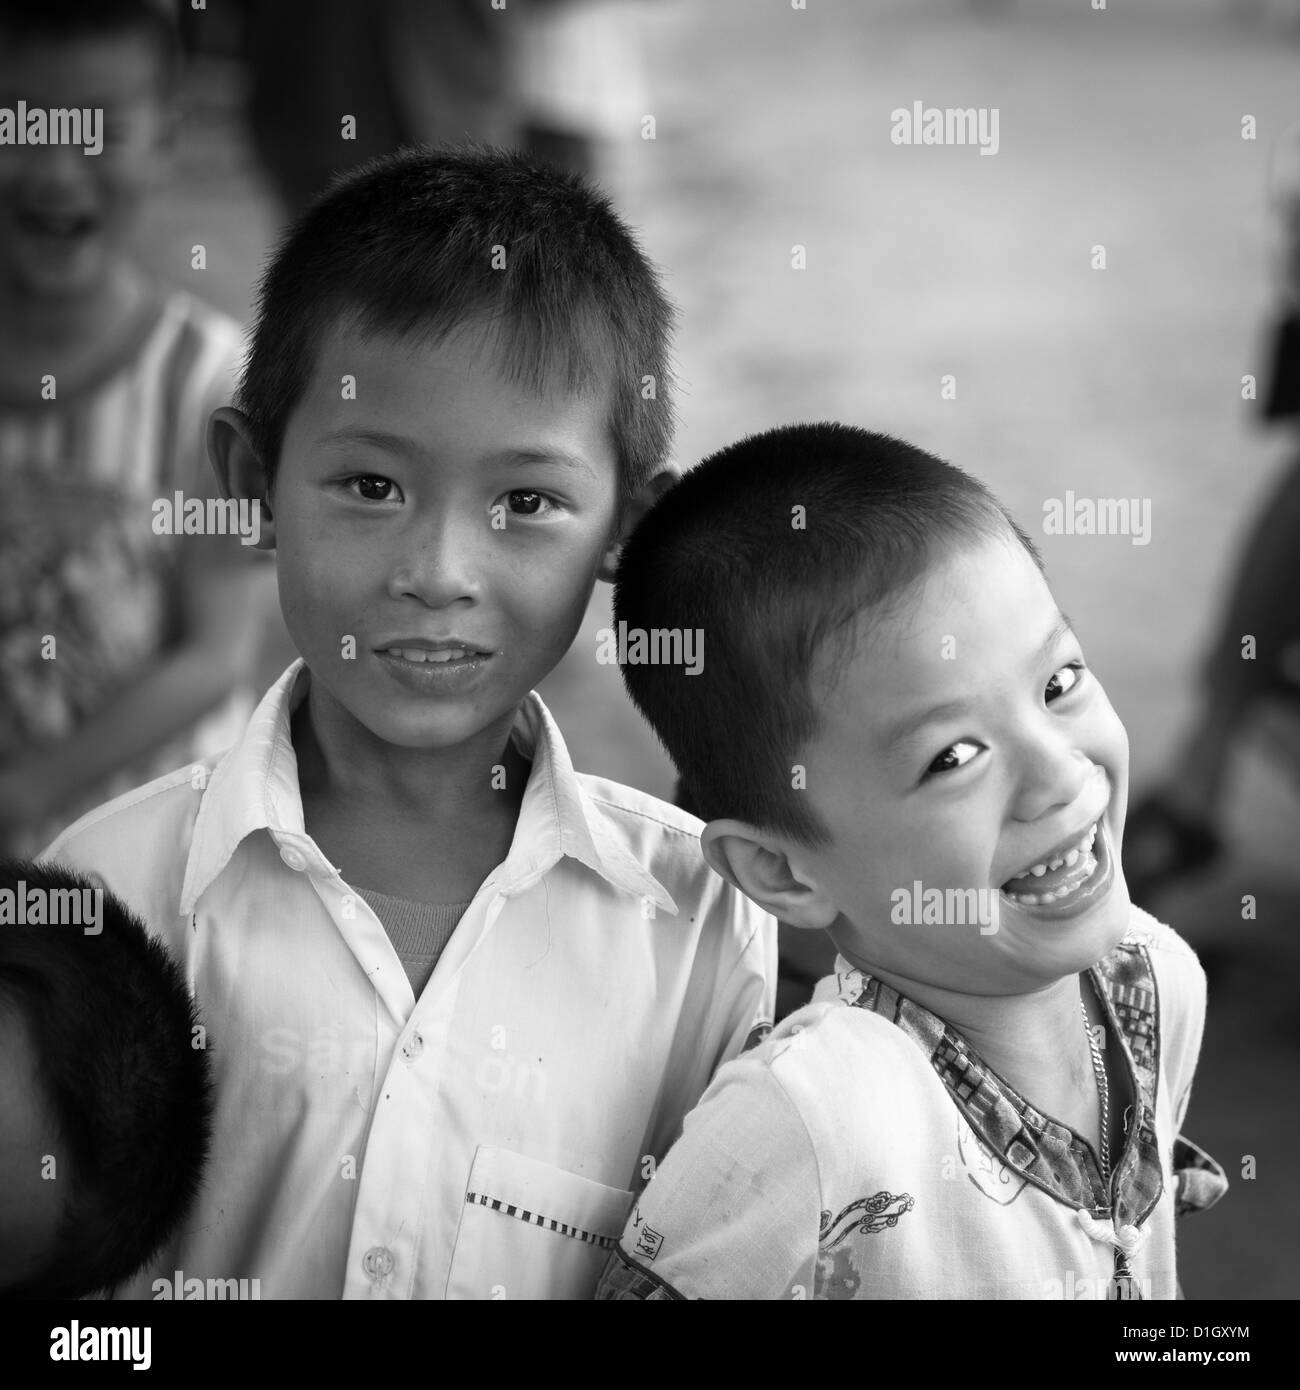 Cheeky Vietnamese children at play Stock Photo - Alamy